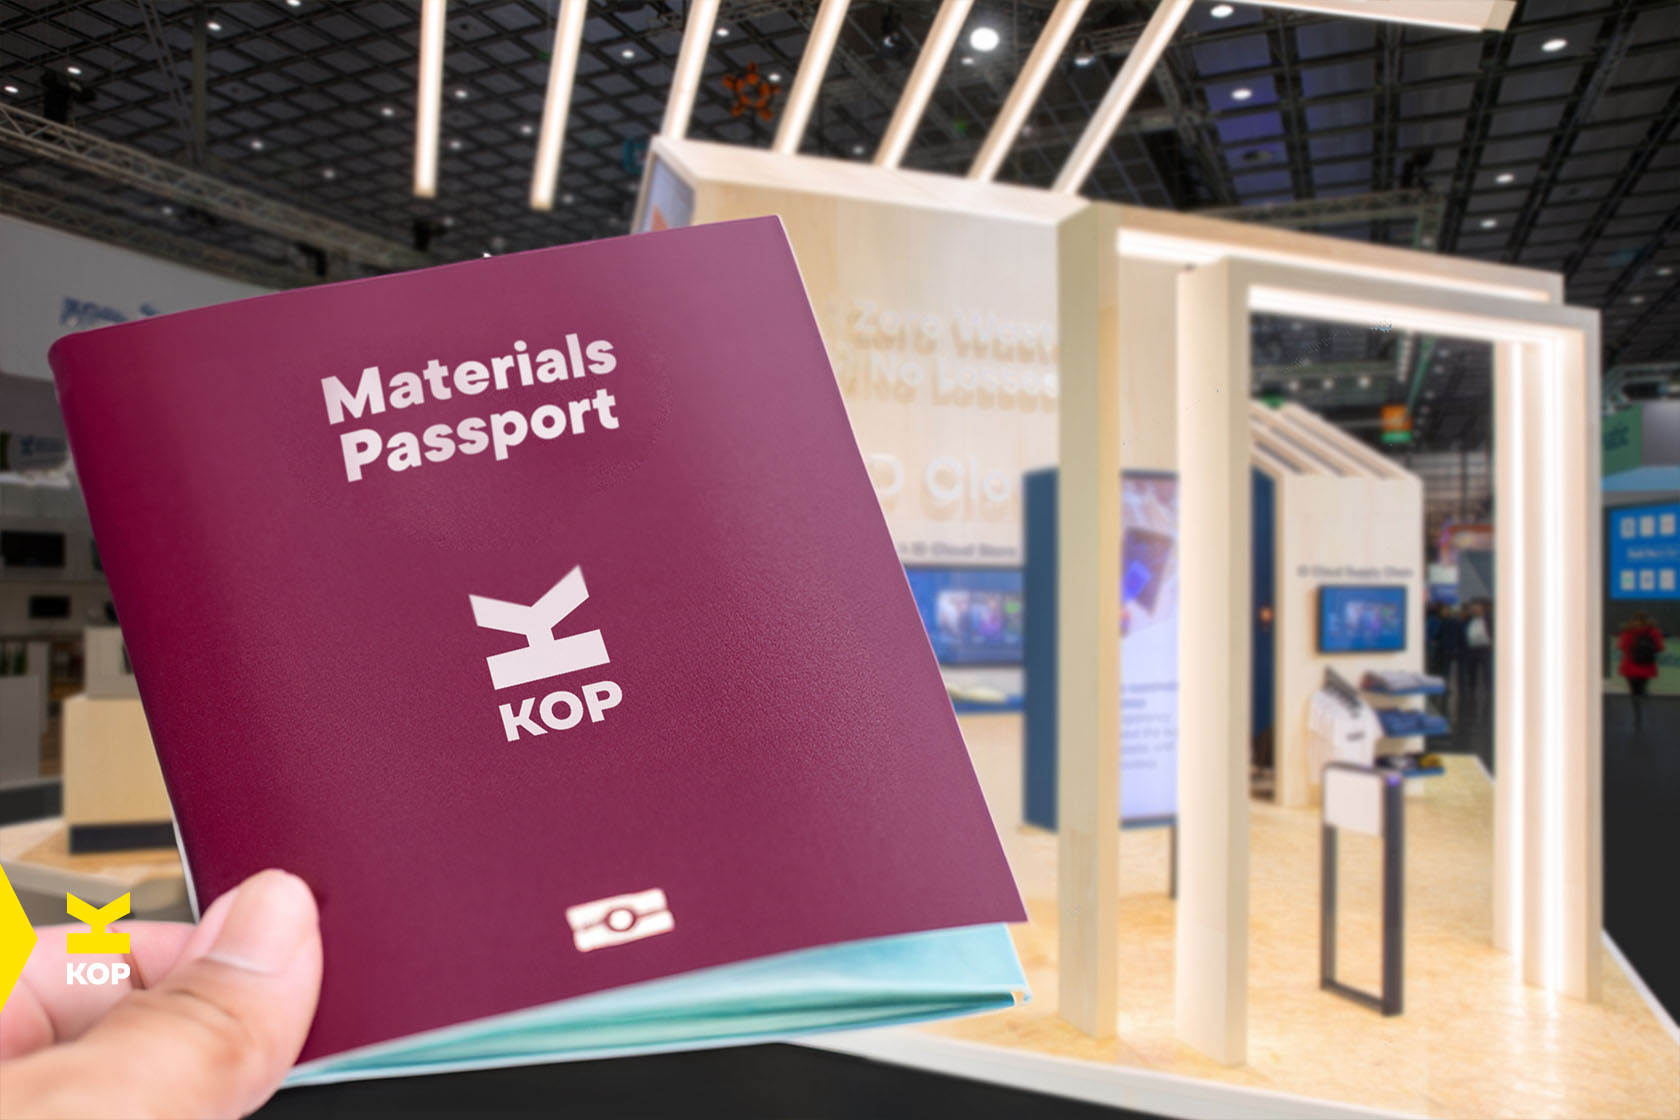 Materials passport